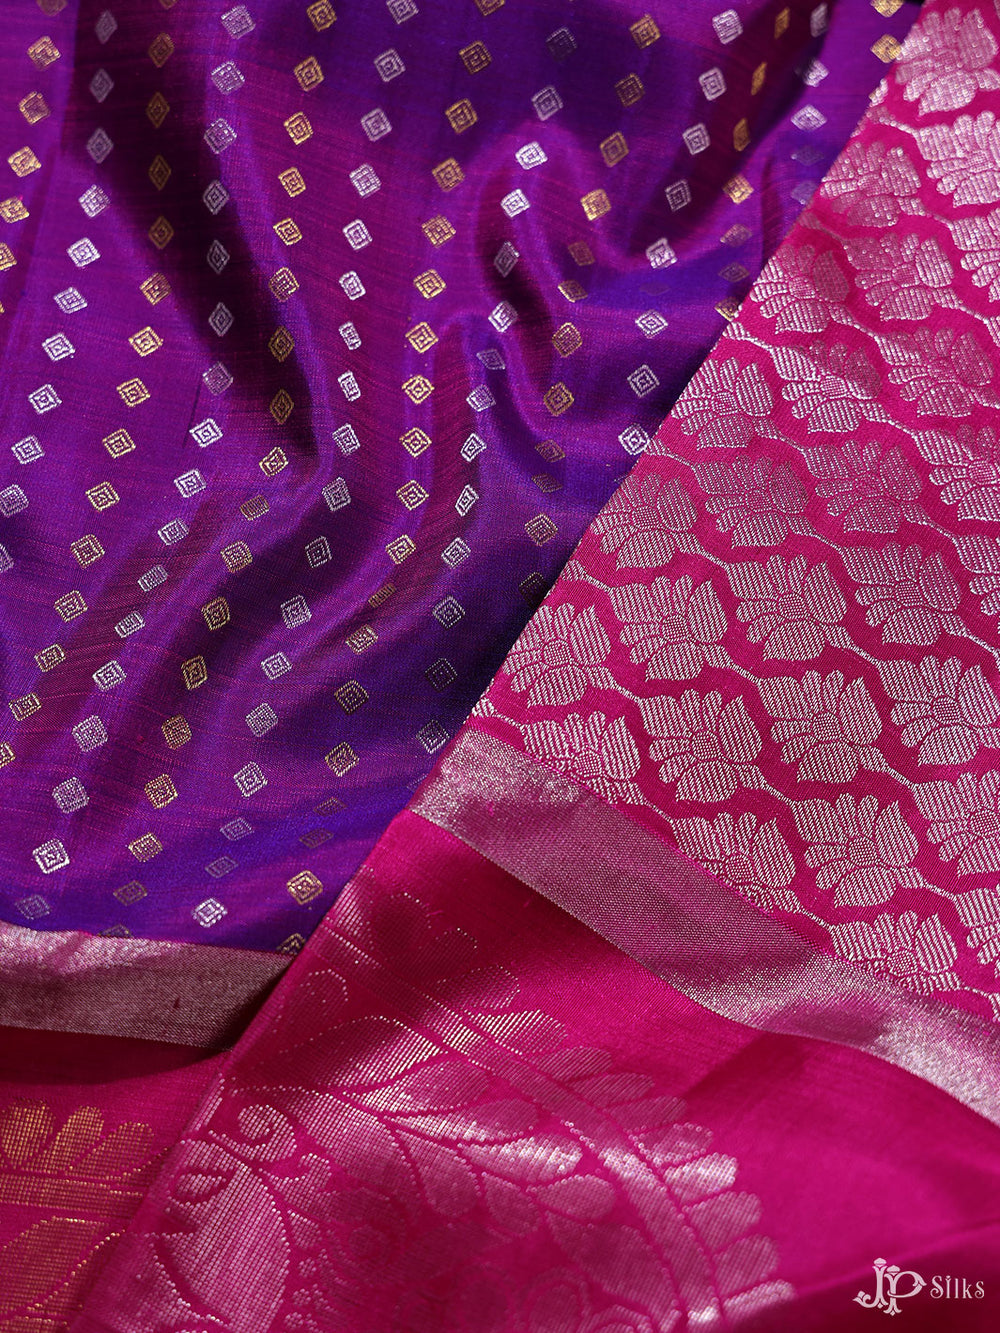 Dual Tone Purple and Pink Kanchipuram Silk Saree - A2547 - View 4